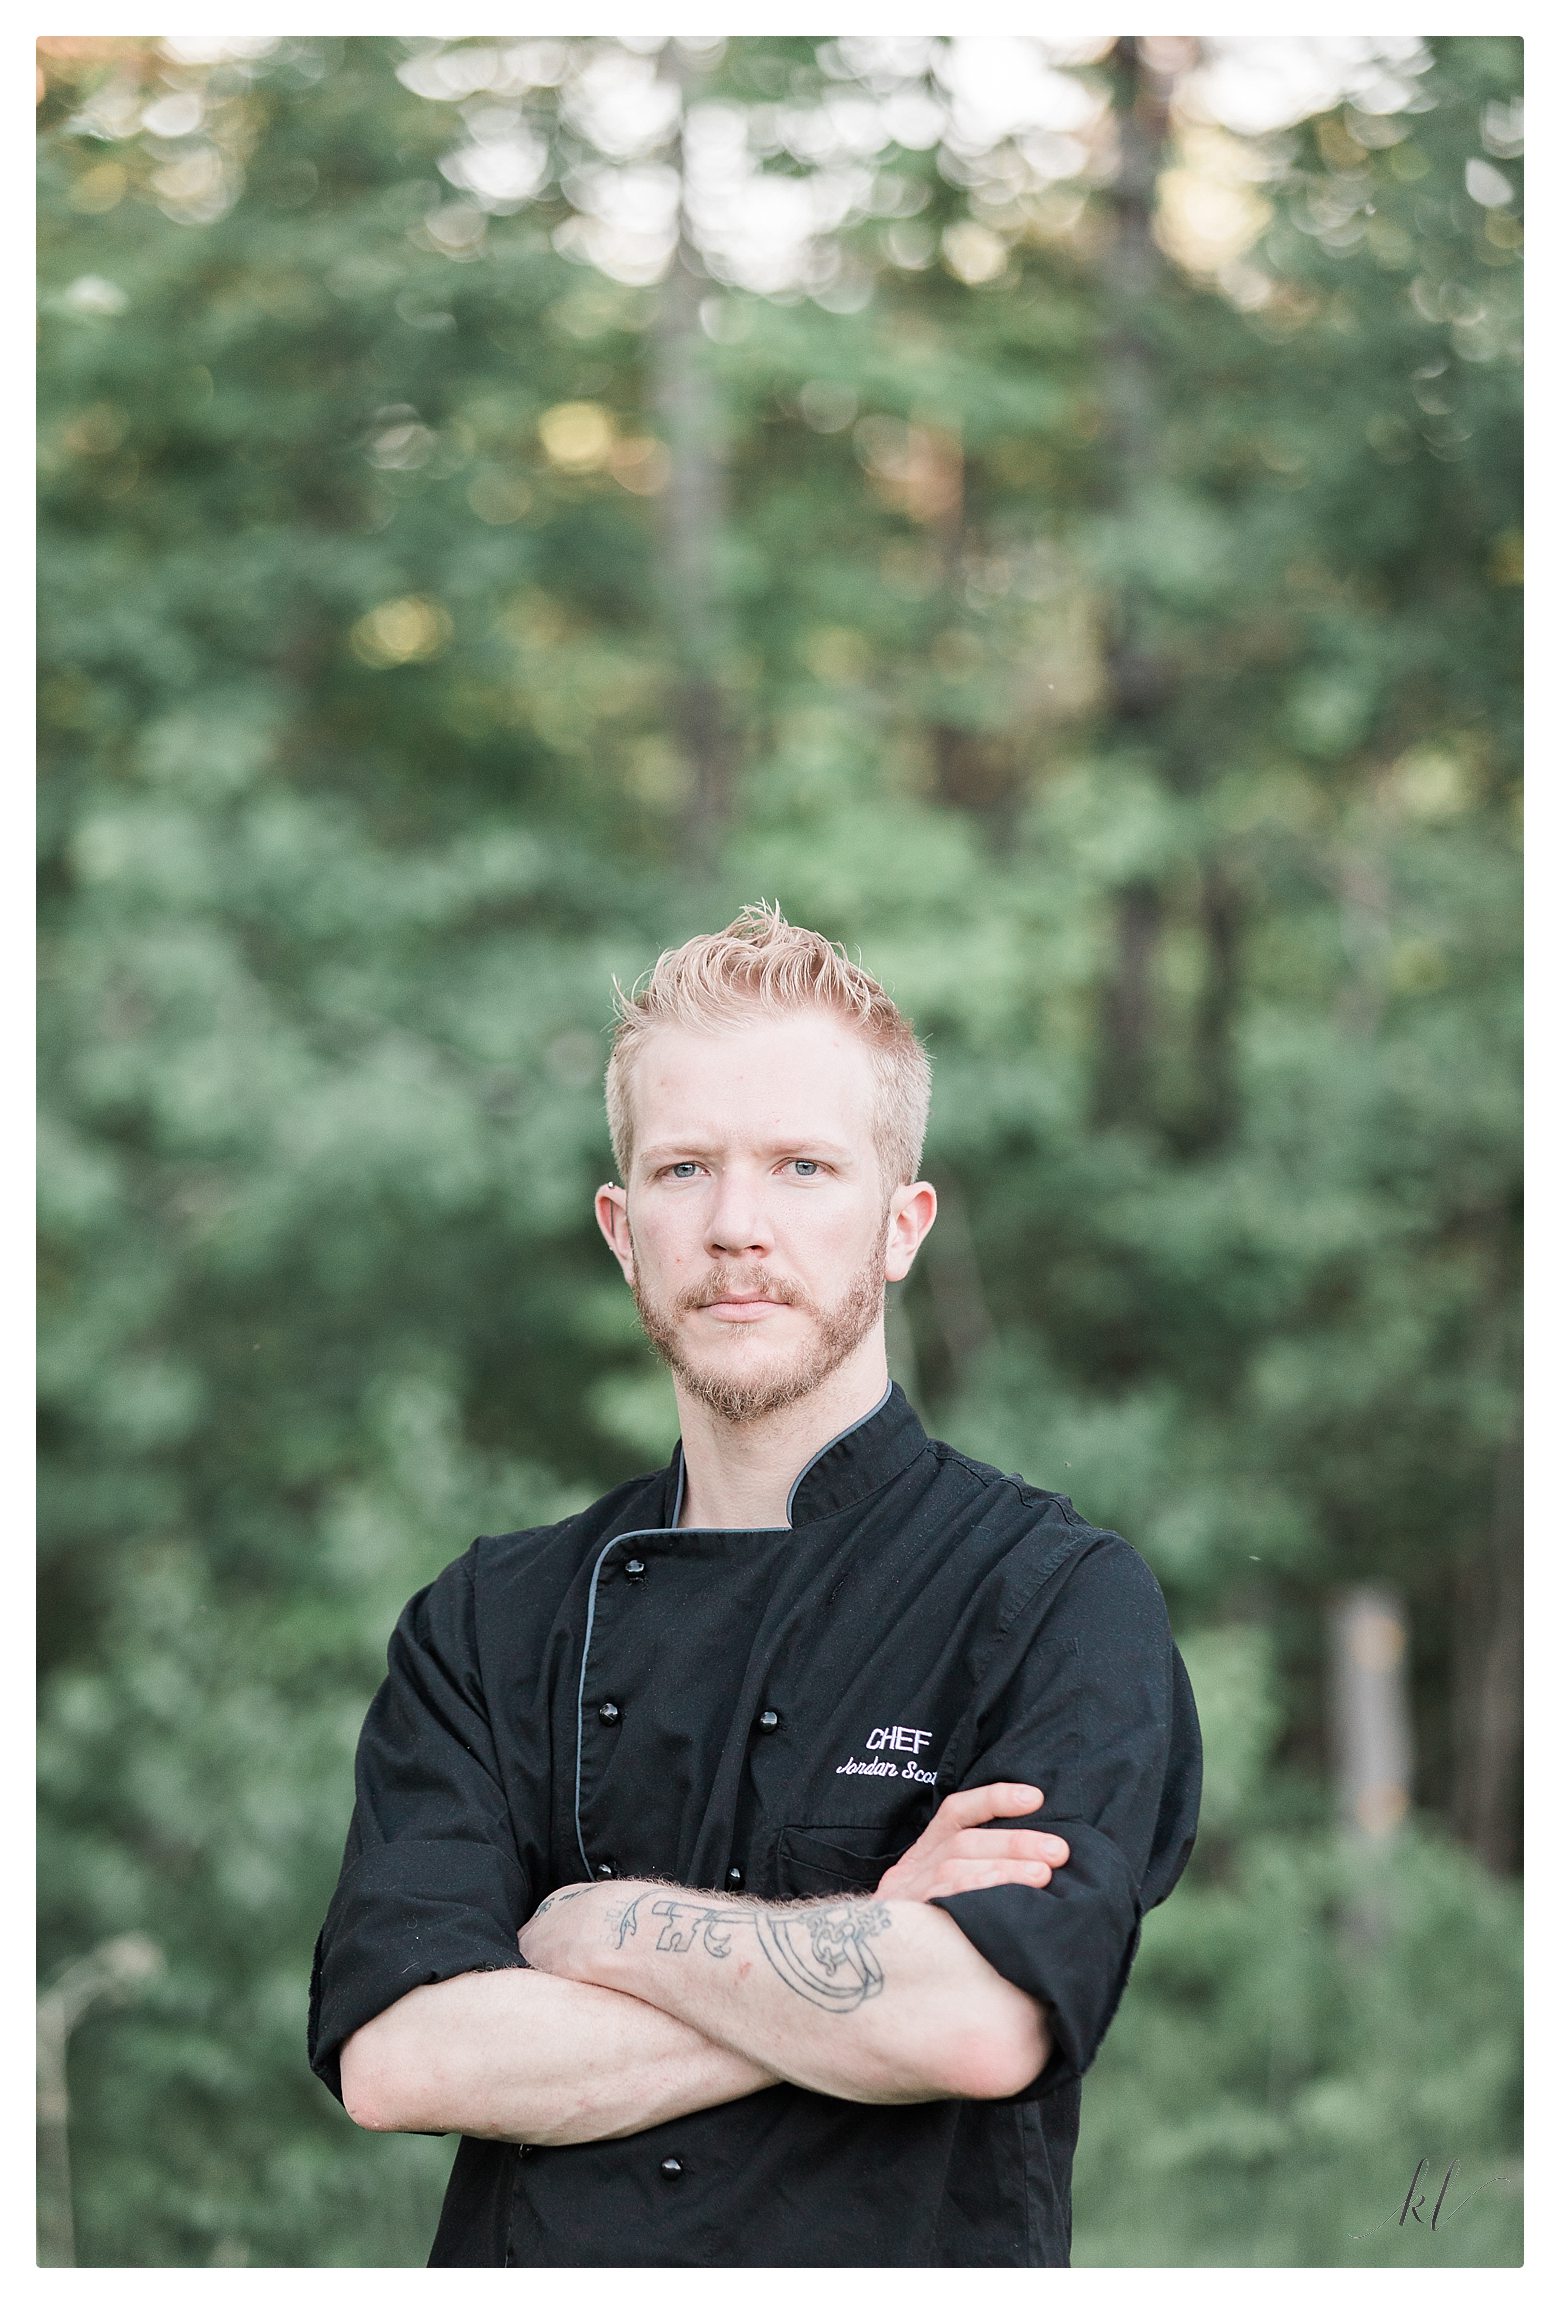 Portrait of Chef Jordan Scott. Chef wearing black coat.